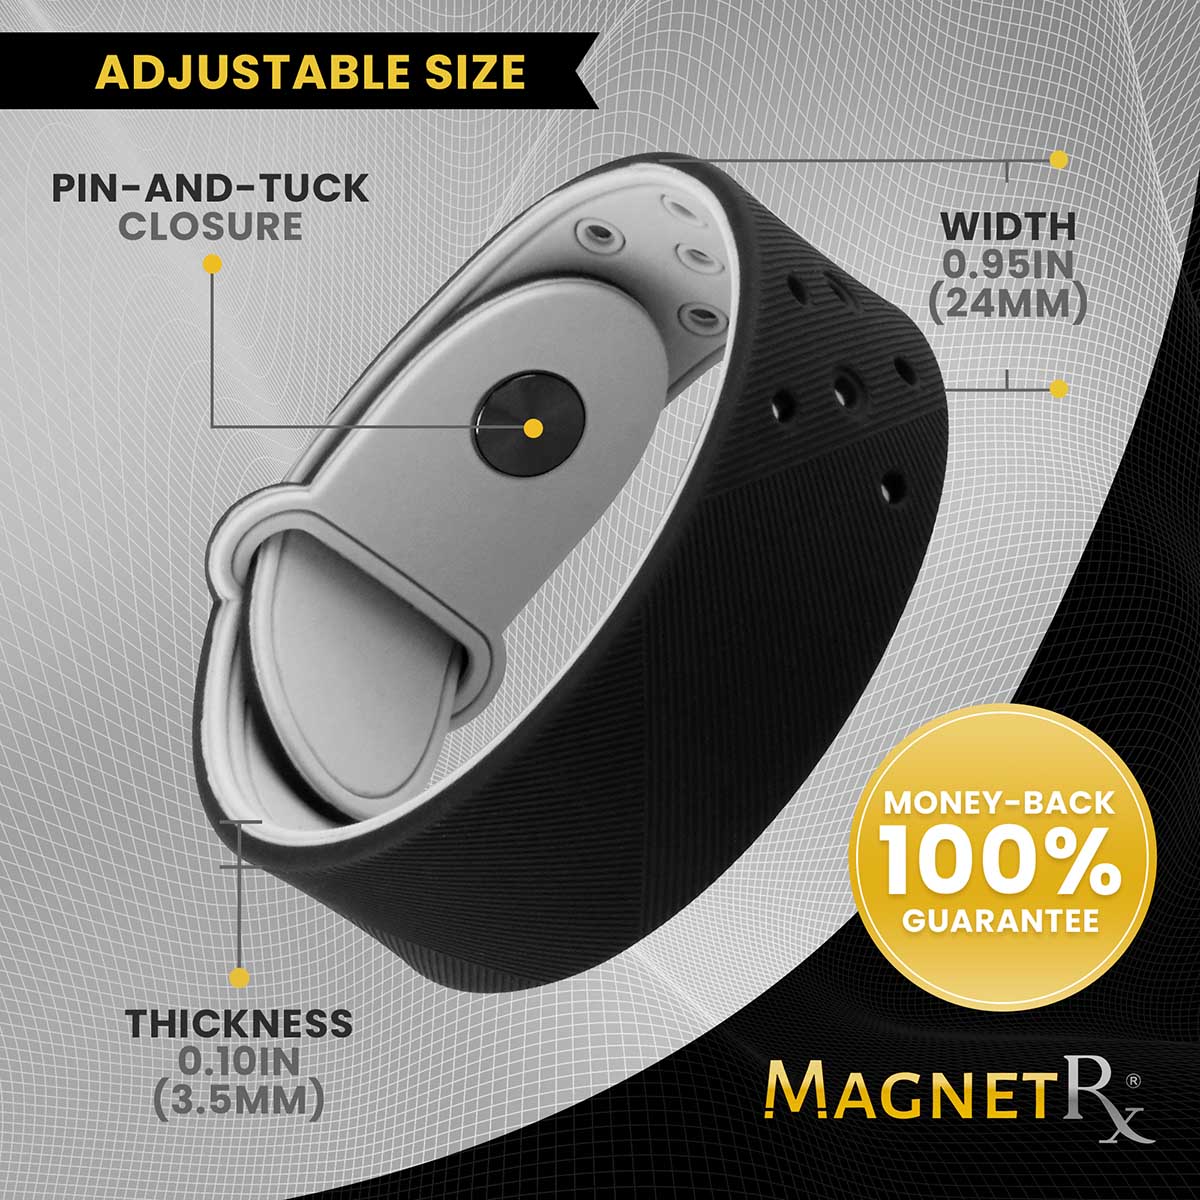 Ultra Strength Sports Magnetic Bracelet (Black)